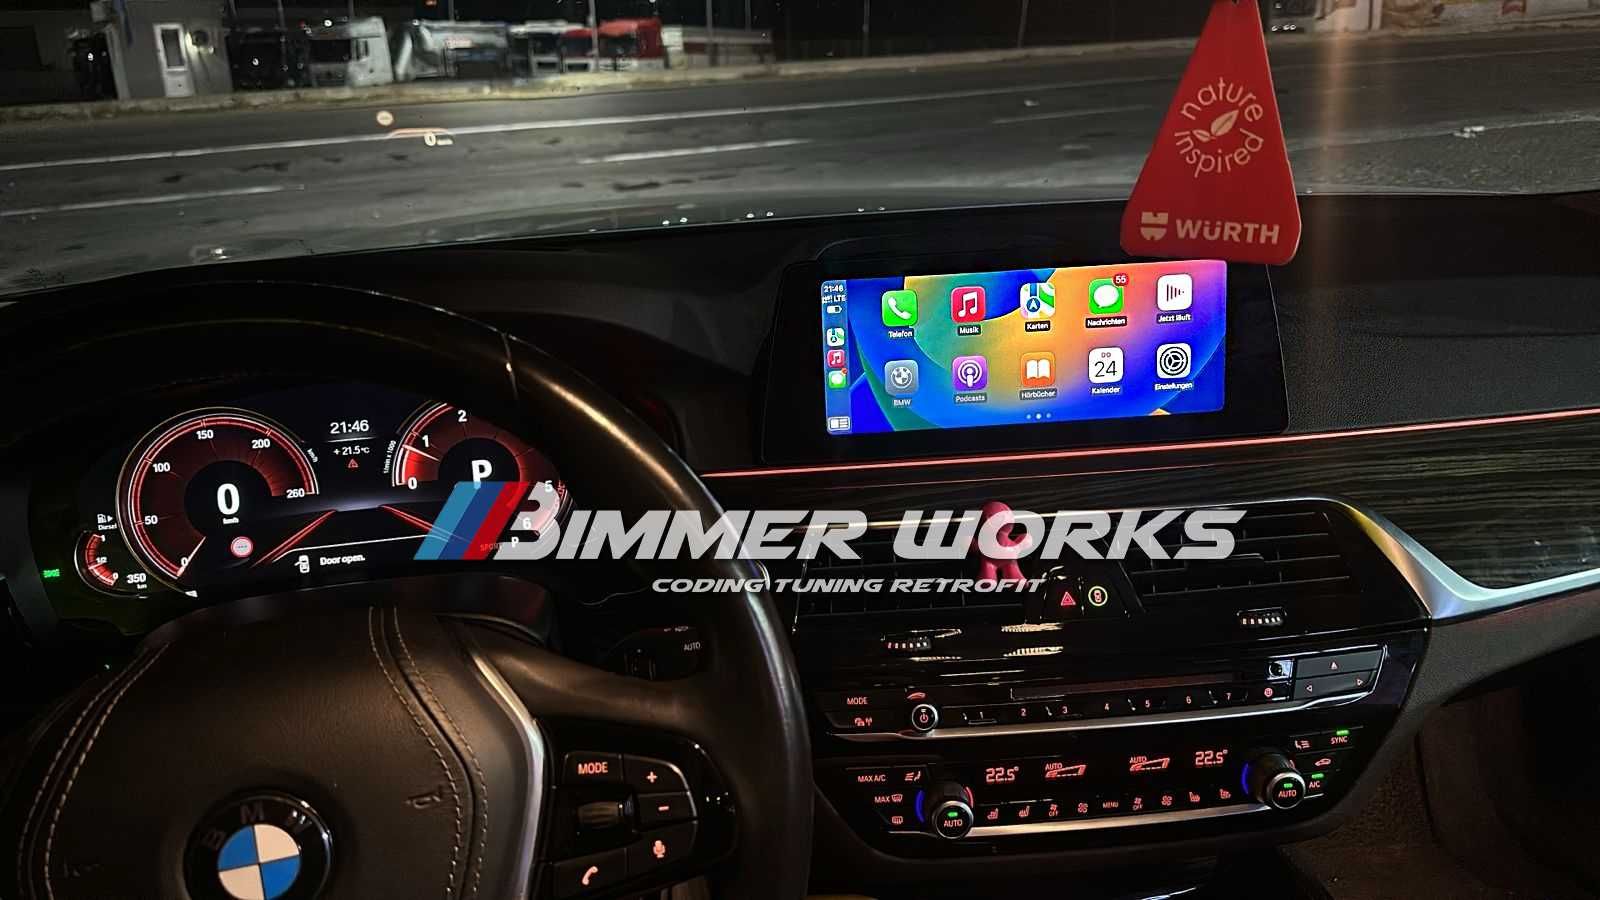 Android Auto , Apple Carplay Activare Mercedes Benz BMW